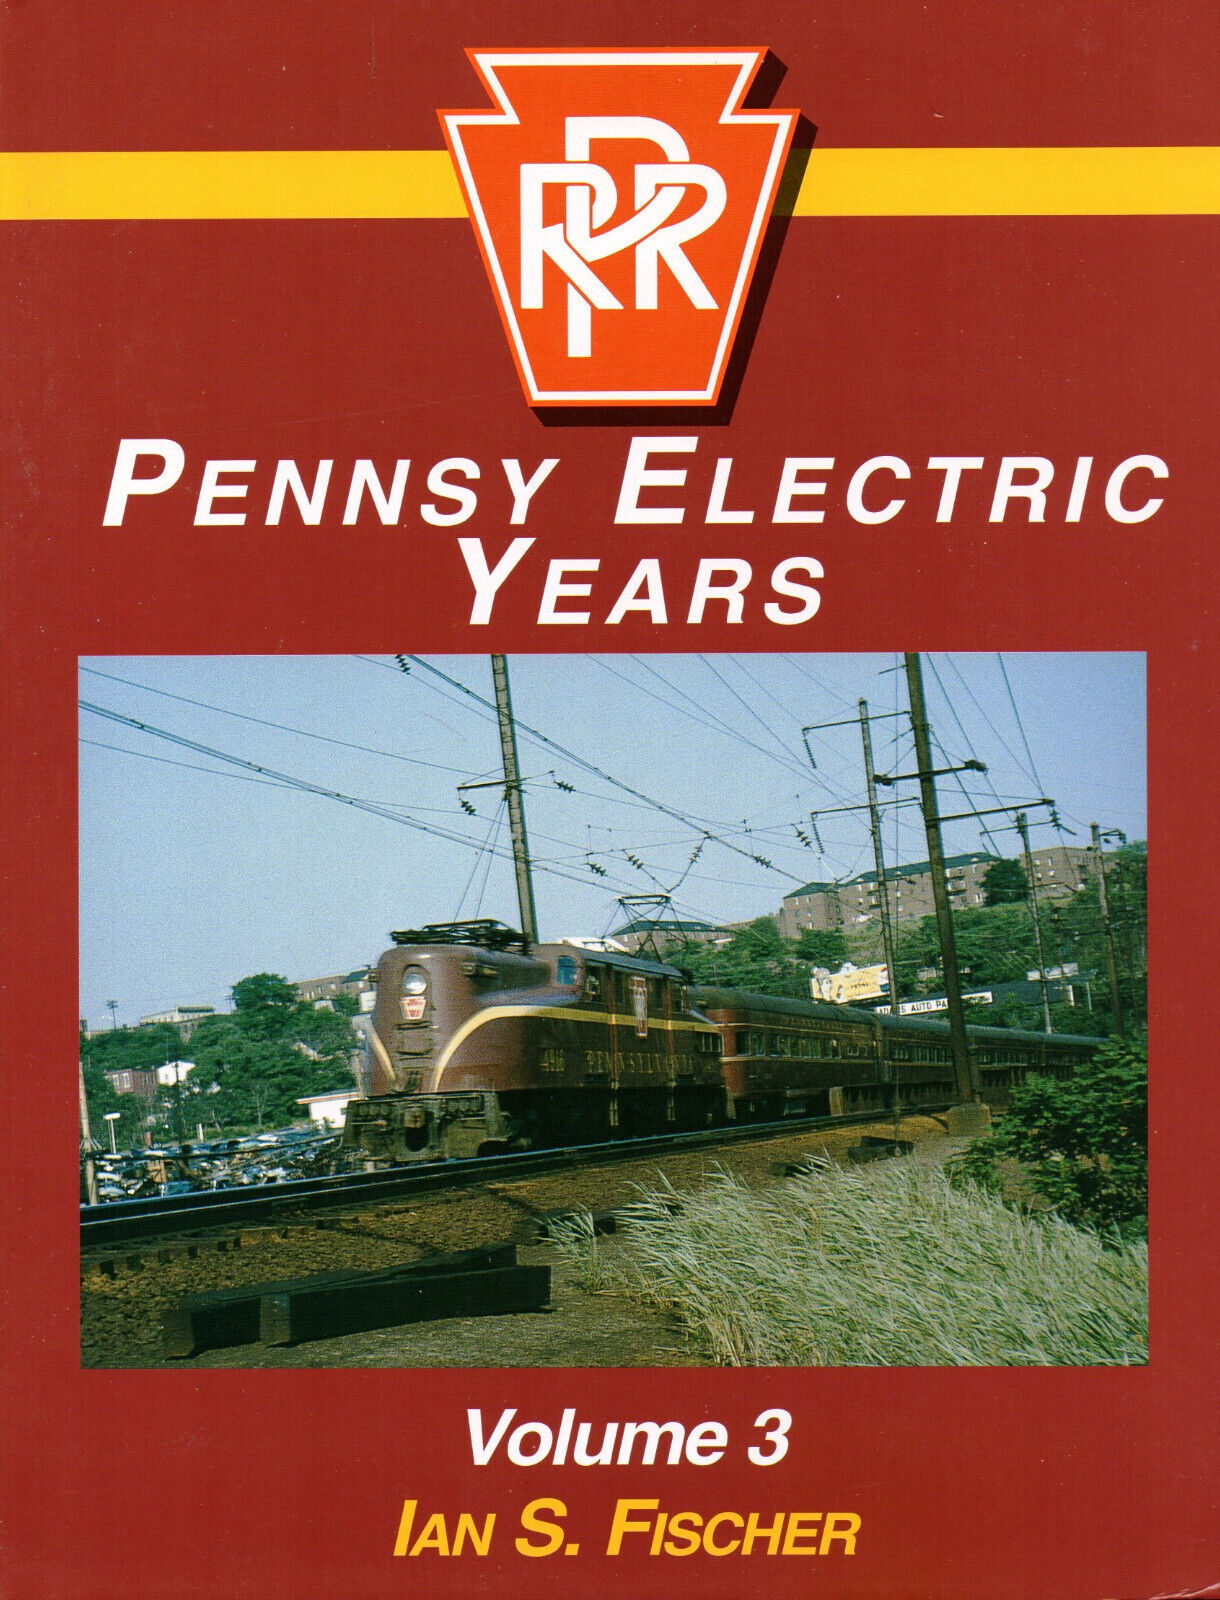 PENNSYLVANIA RAILROAD PENNSY ELECTRIC YEARS